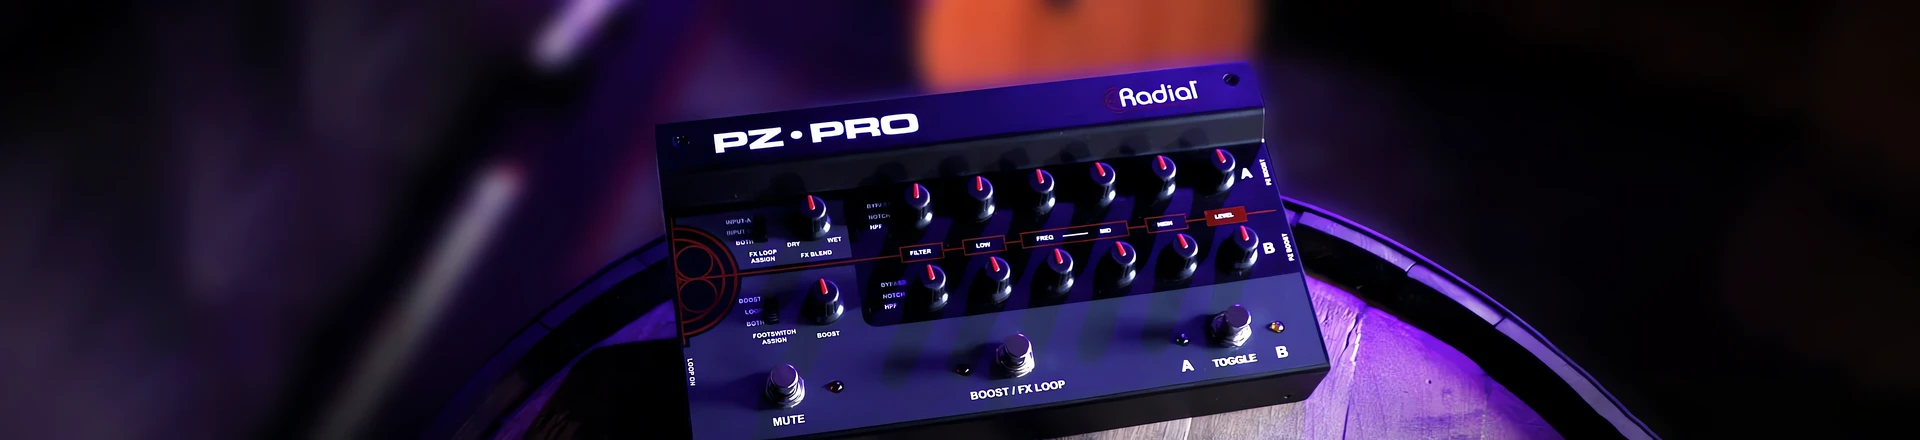 Radial PZ-Pro - preamp akustyczny z górnej półki 